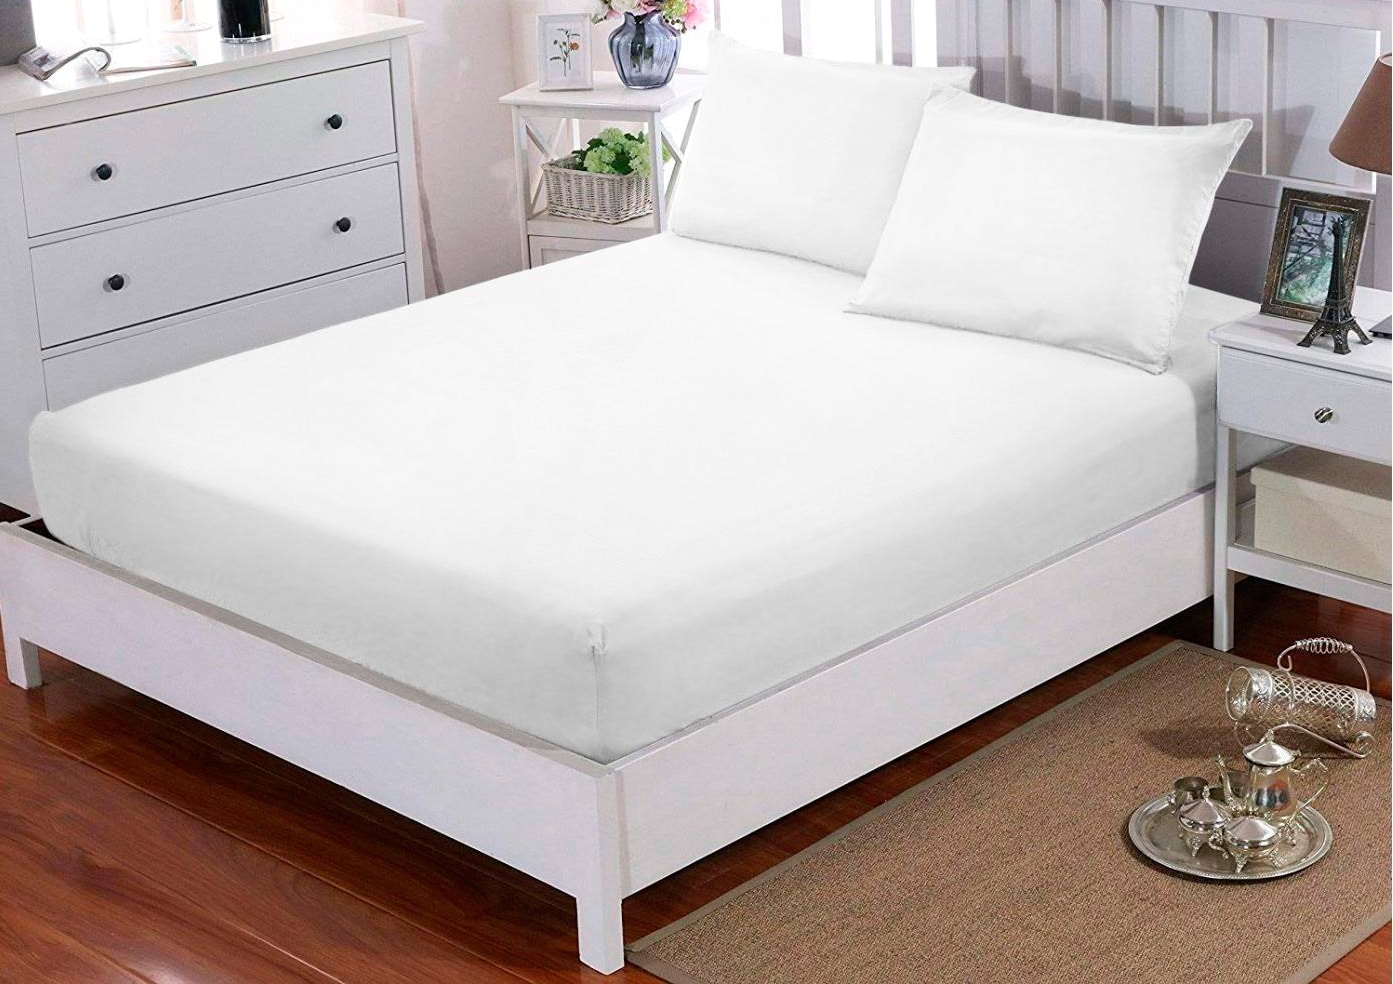 low mattresses for under bed storage